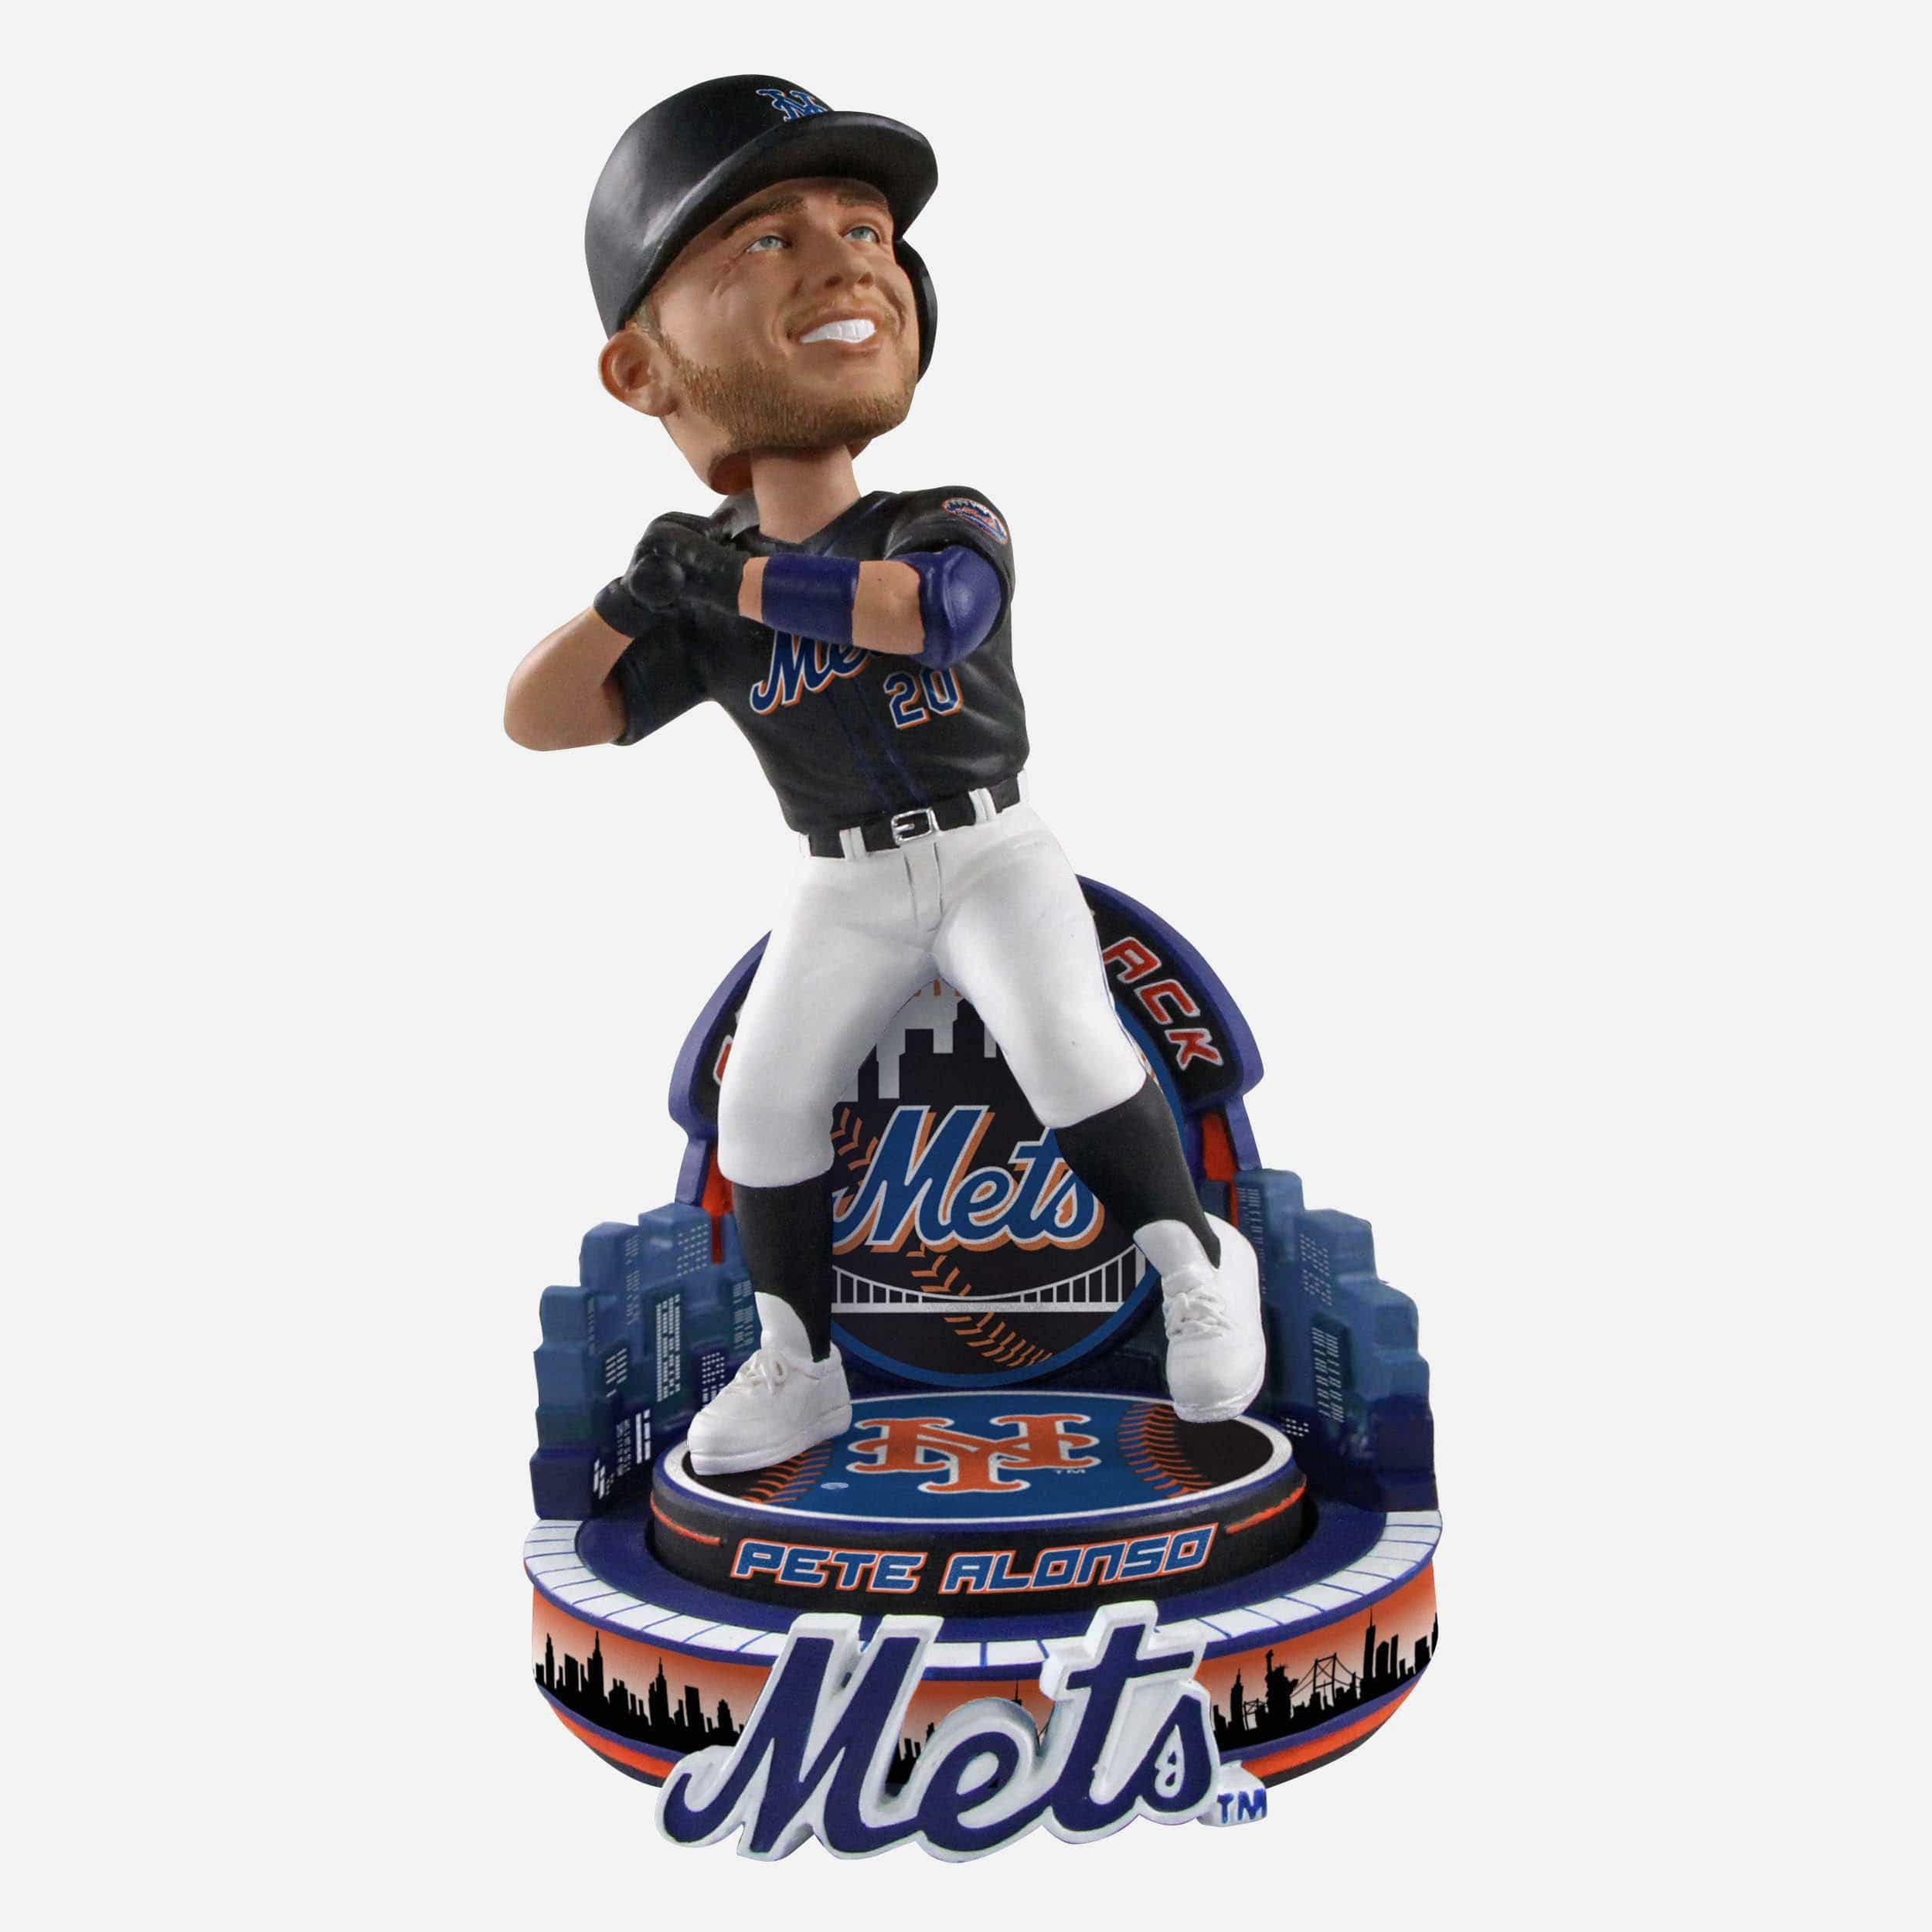 Pete Alonso New York Mets 2019 Home Run Derby Champion Bobblehead FOCO